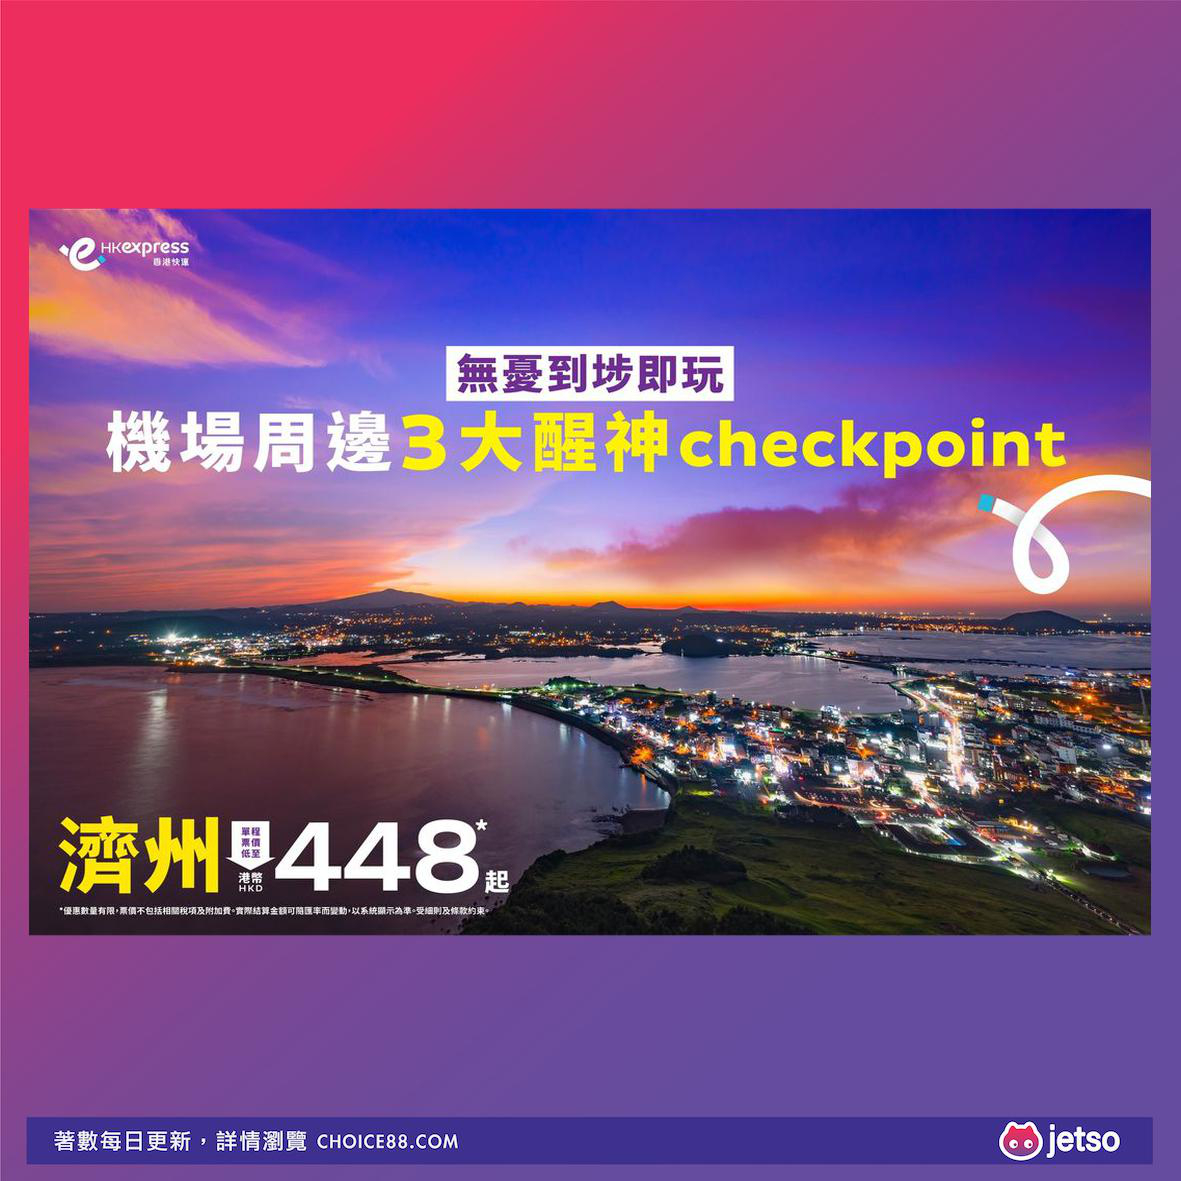 HK Express : [機票優惠]濟州島超值旅遊